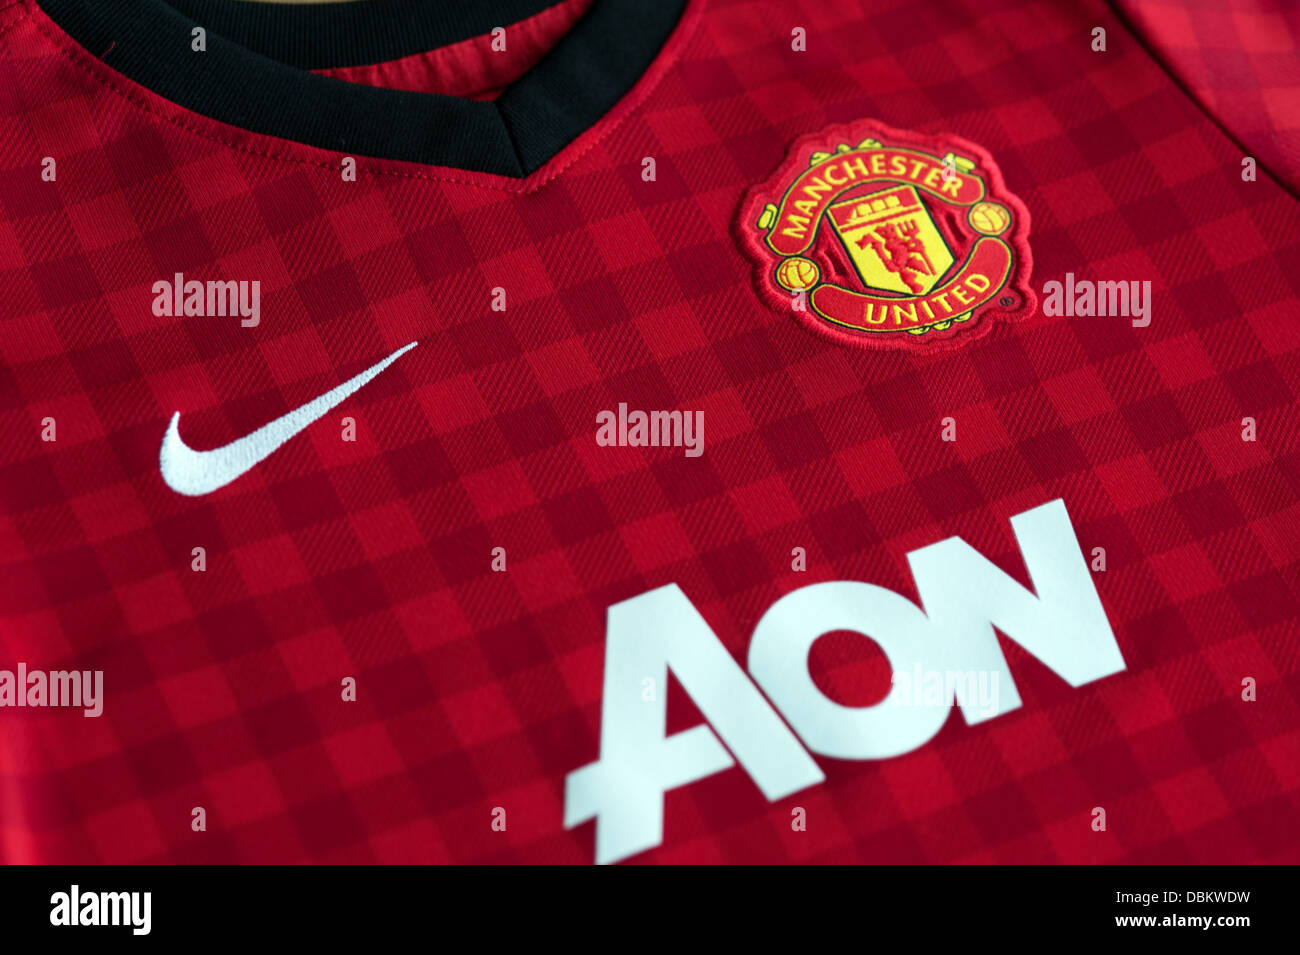 Manchester United Replica Kit Stockfoto